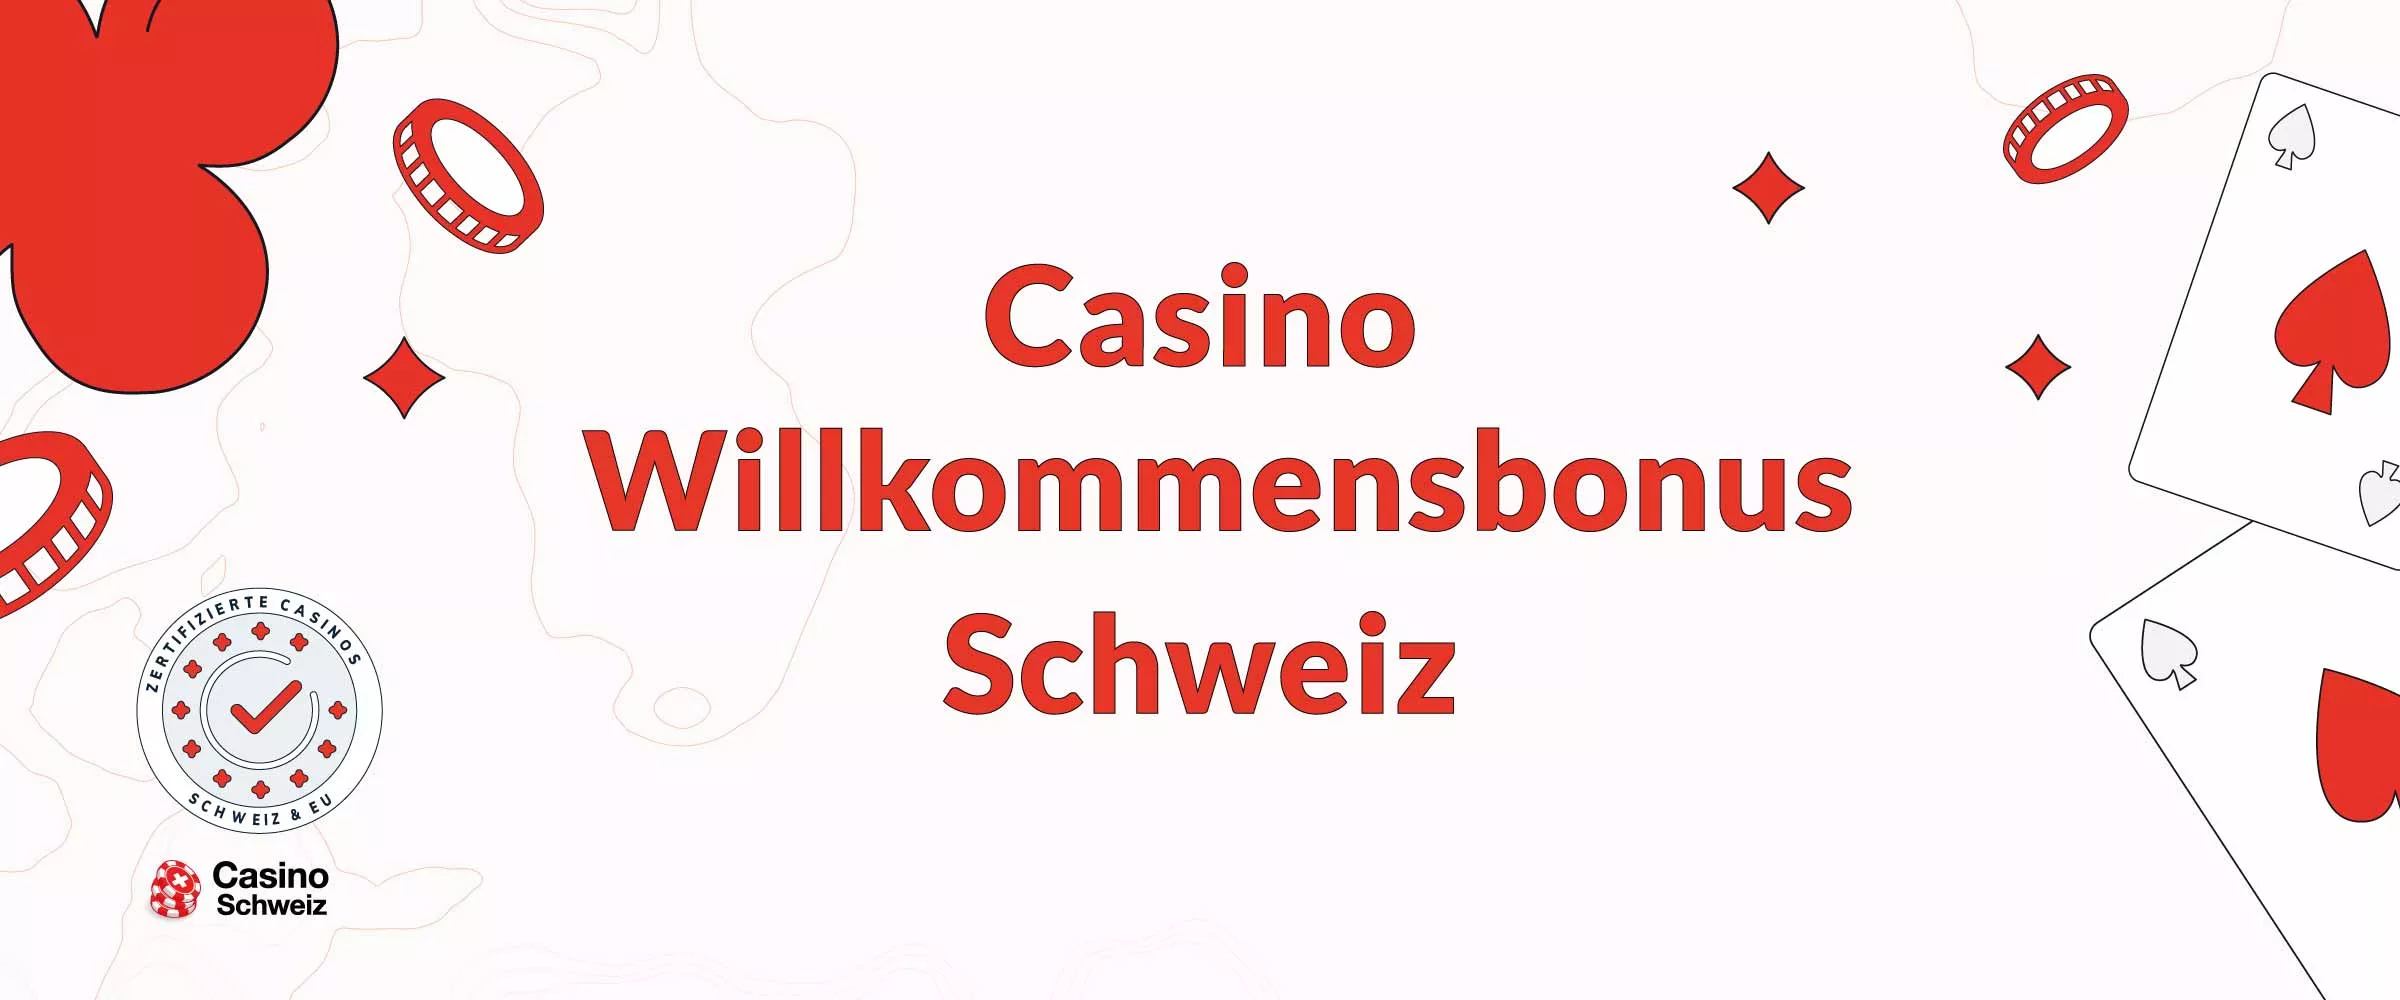 Casino Willkommensbonus 